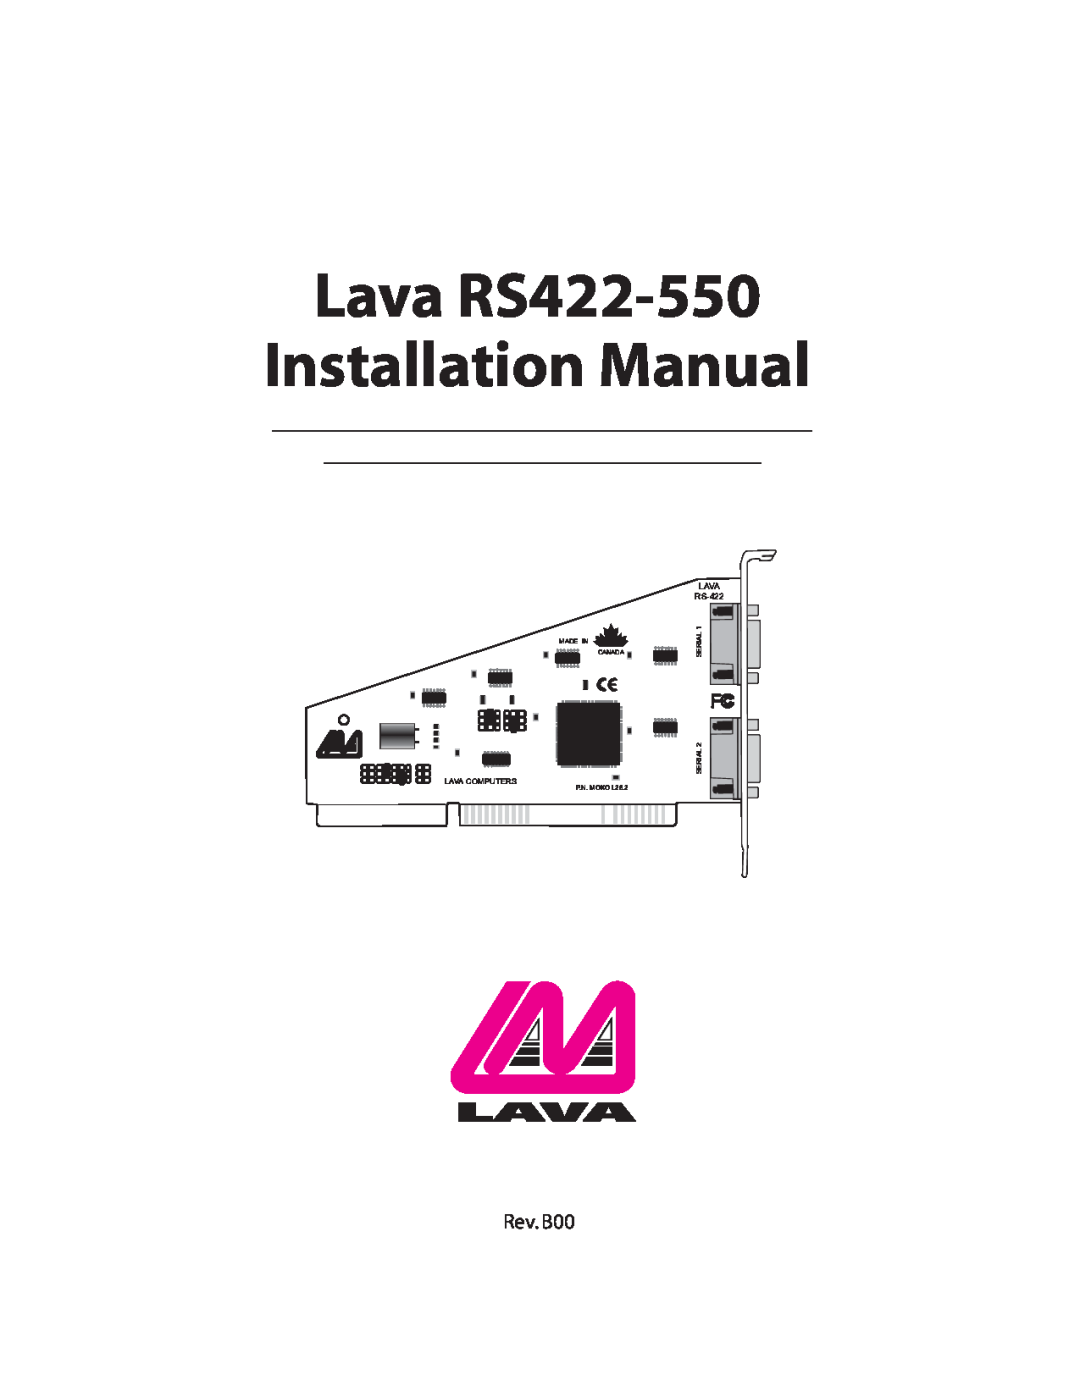 Lava Computer RS550 installation manual Lava RS422-550 Installation Manual, LAVA RS-422 SERIAL, Serial Lava Computers 